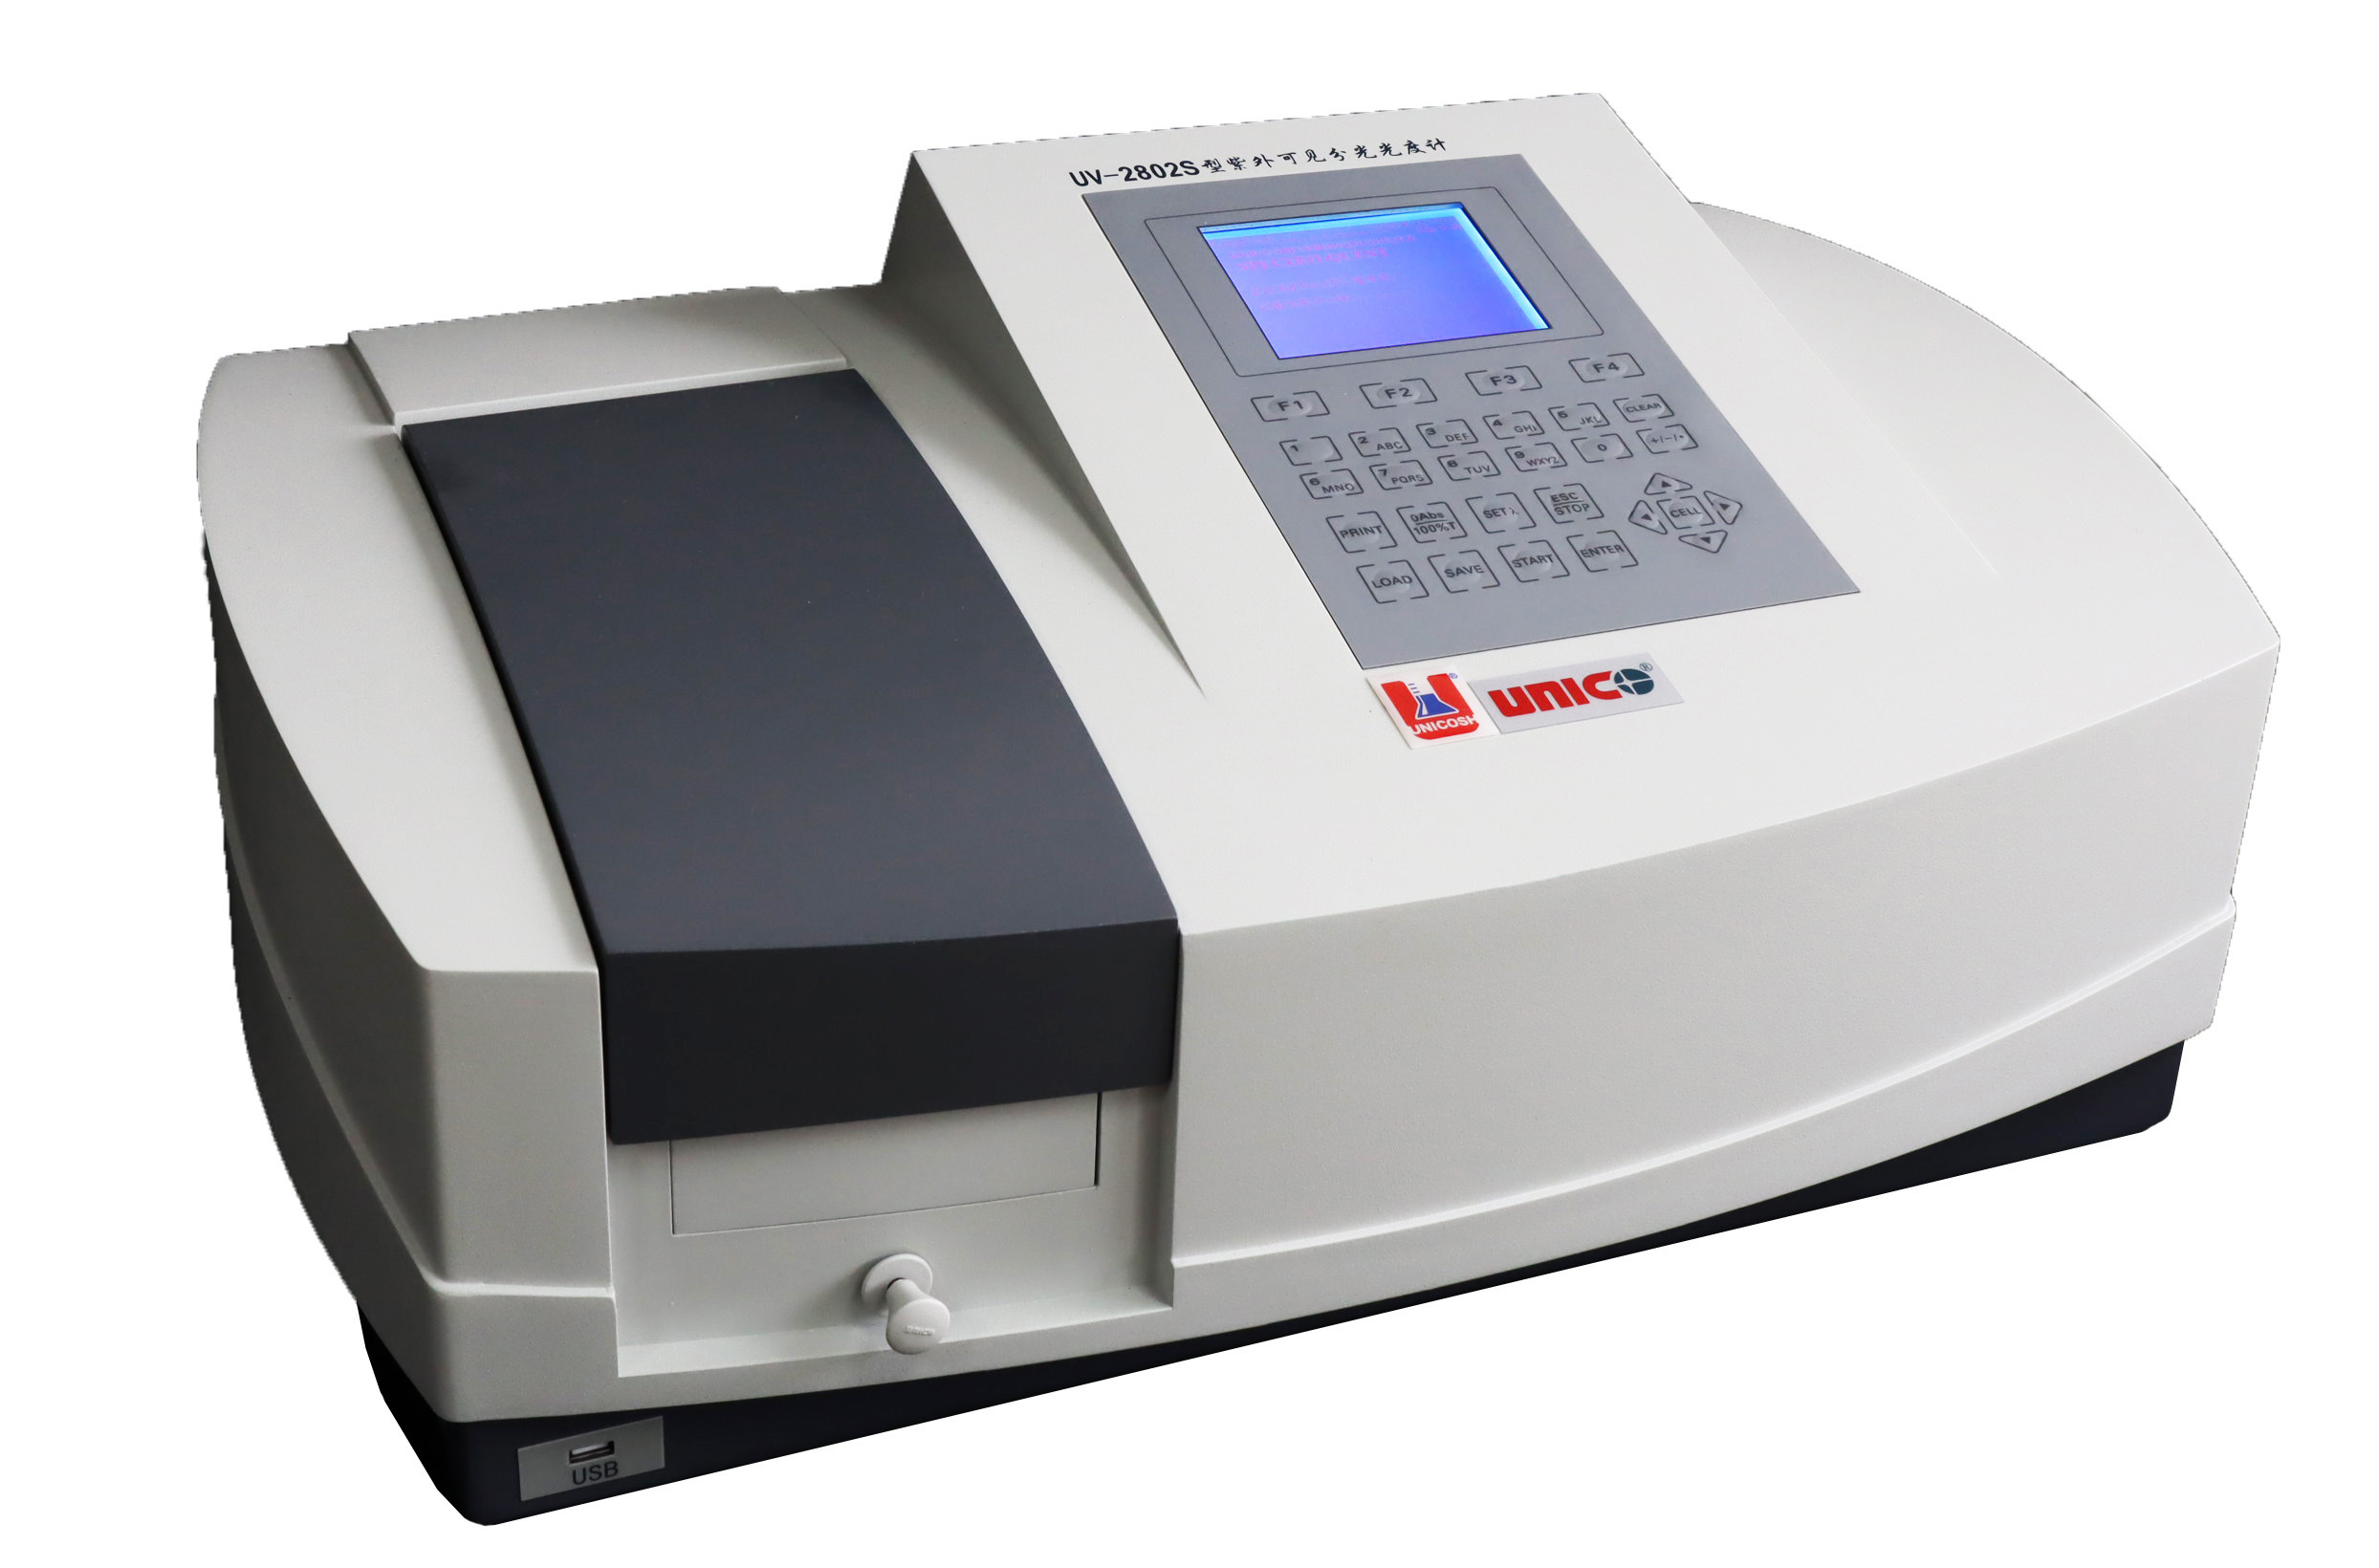 UV-2802S扫描型紫外可见分光光度计（大屏幕LCD显示）